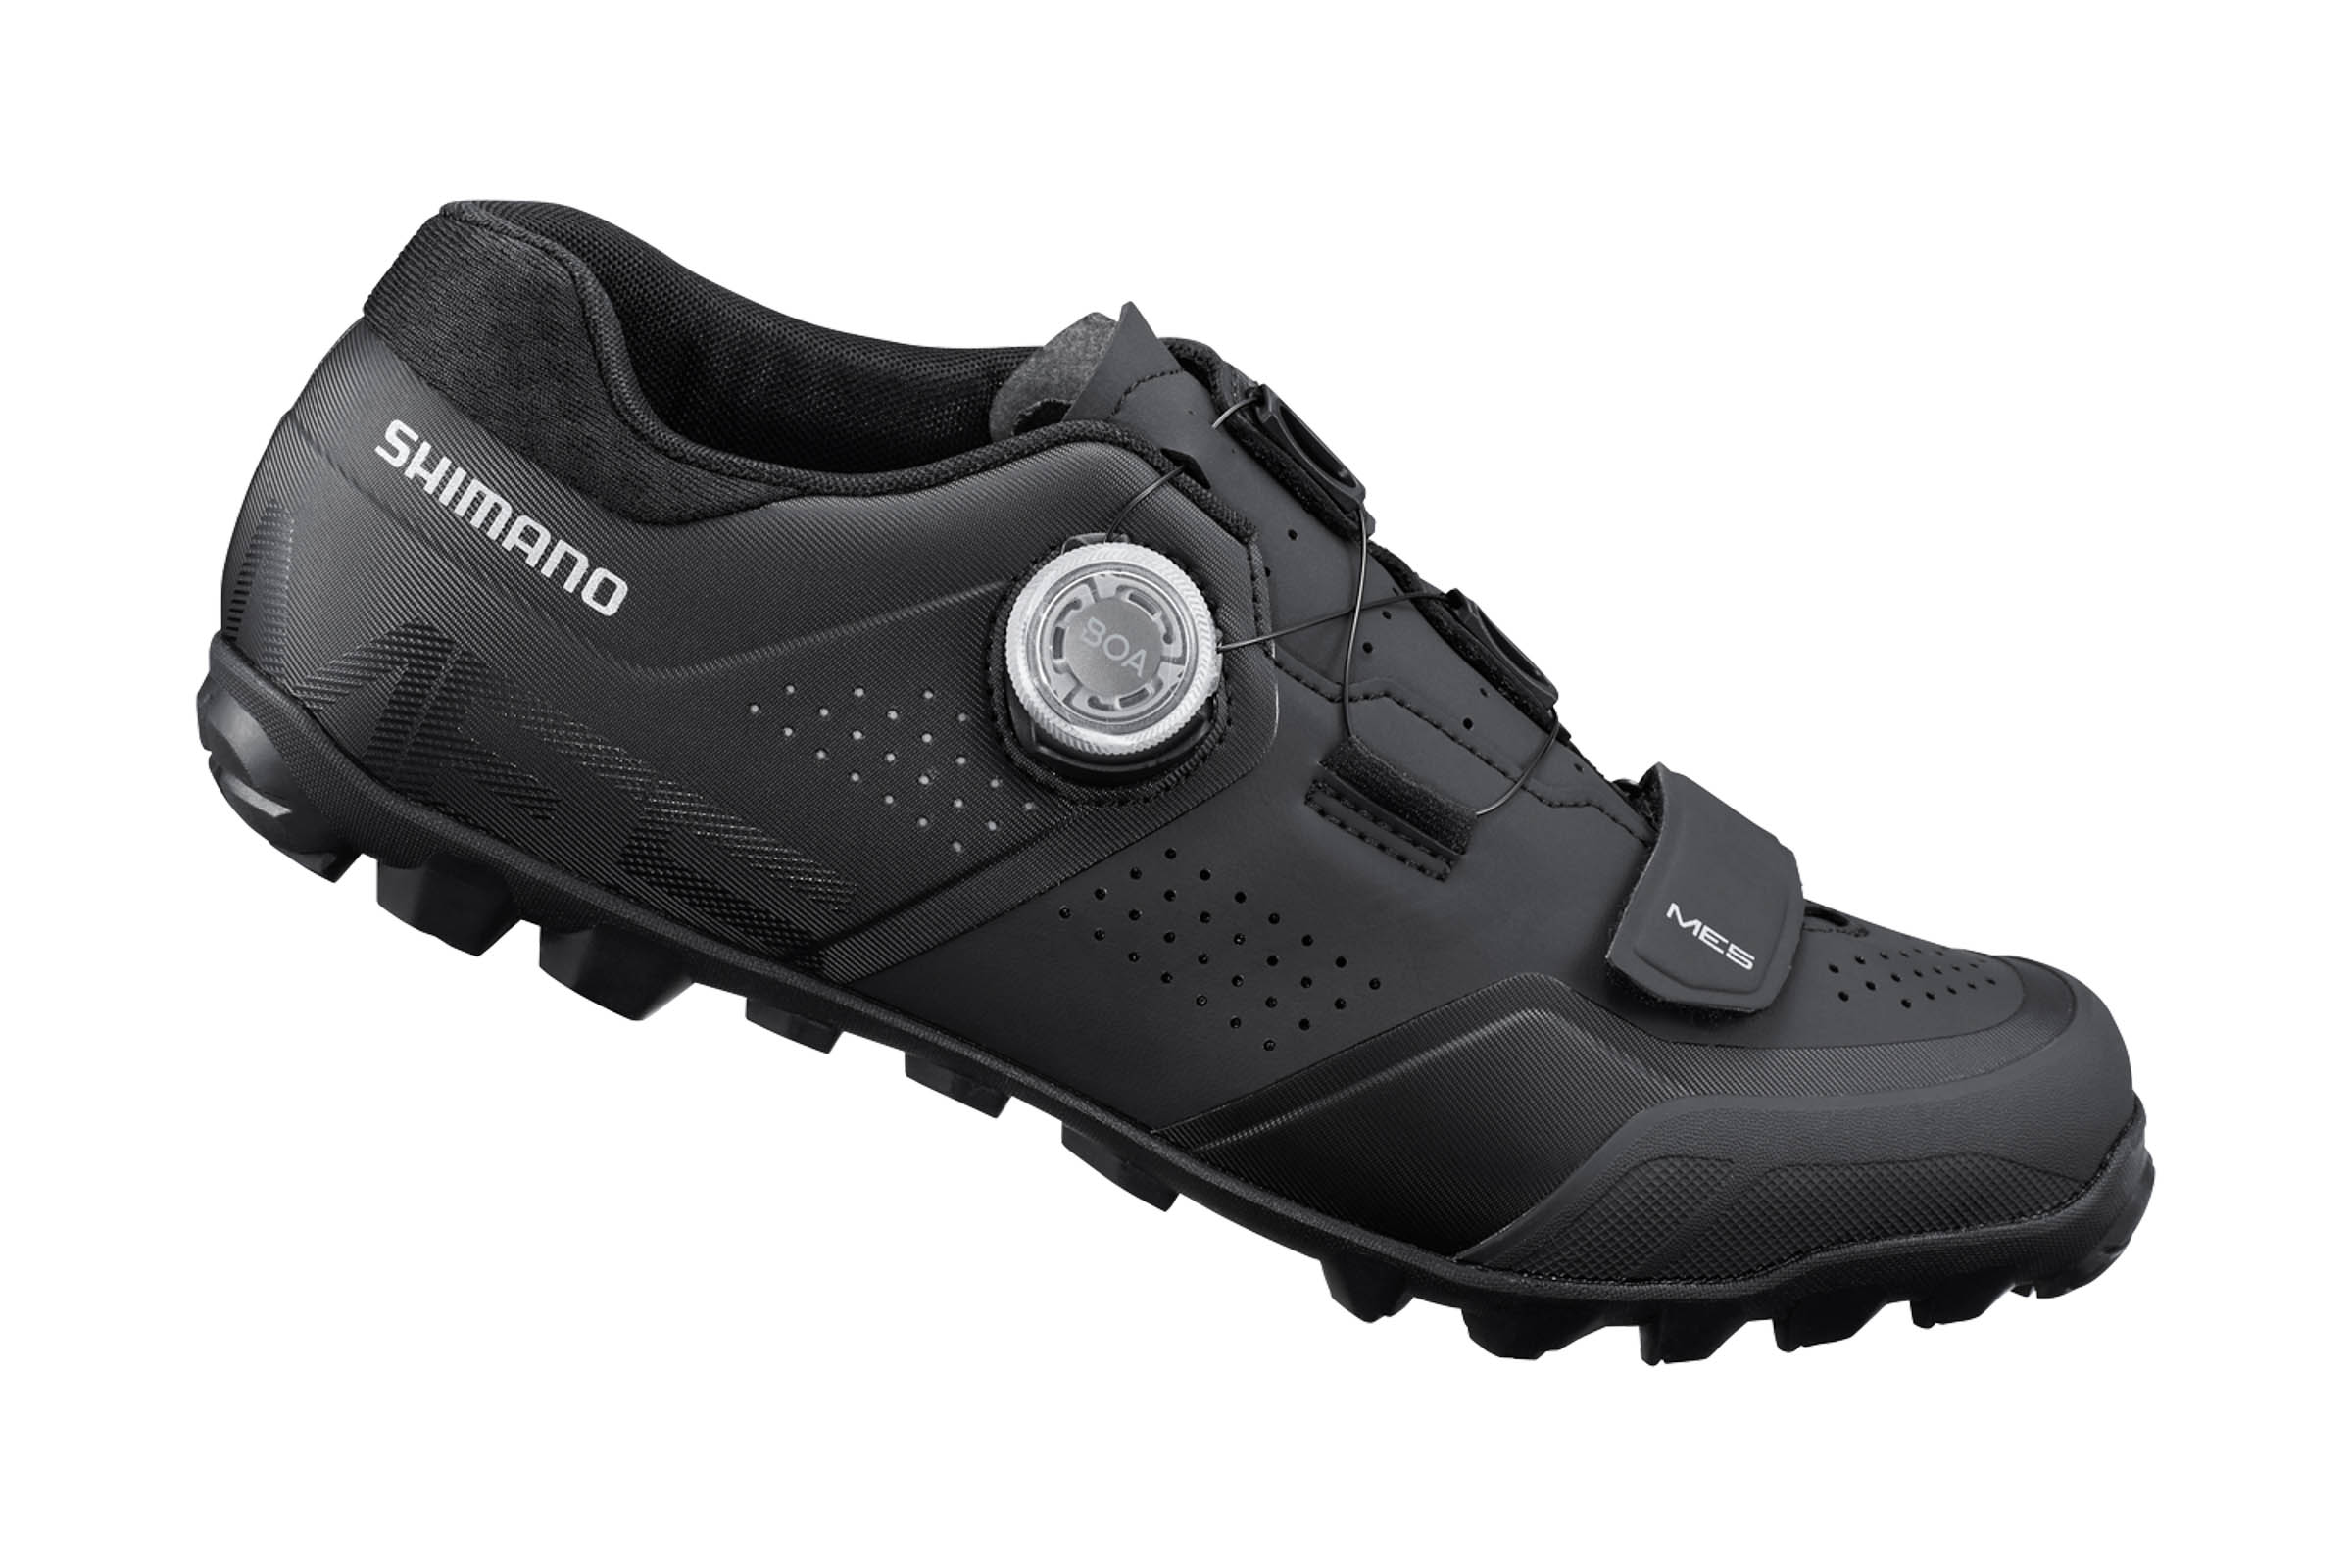 Shimano ME7 Trail/Enduro MTB Mountain Bike Shoes SH-ME702 Black 46 US 11.2 